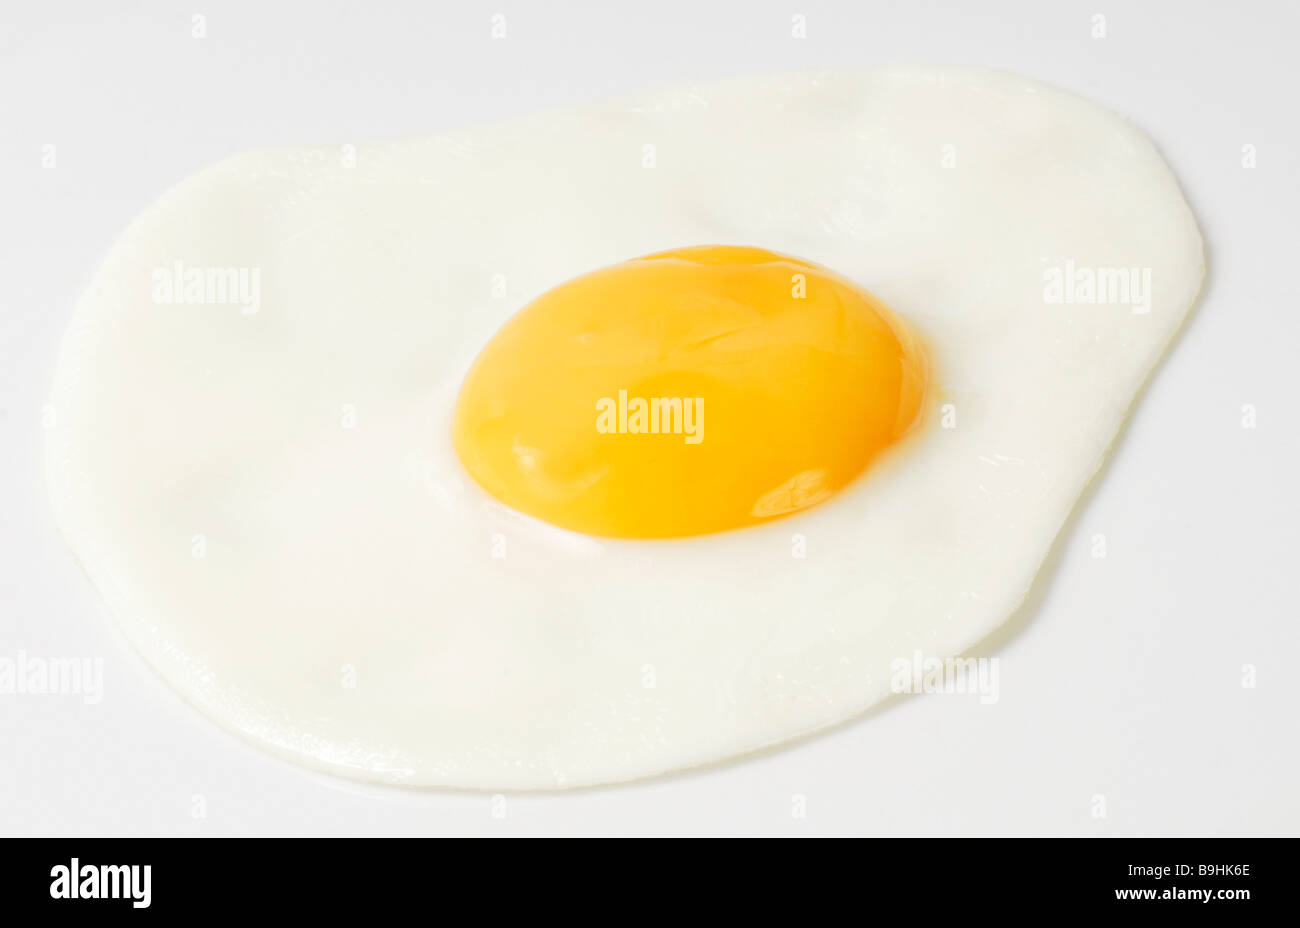 Fried egg Stock Photo